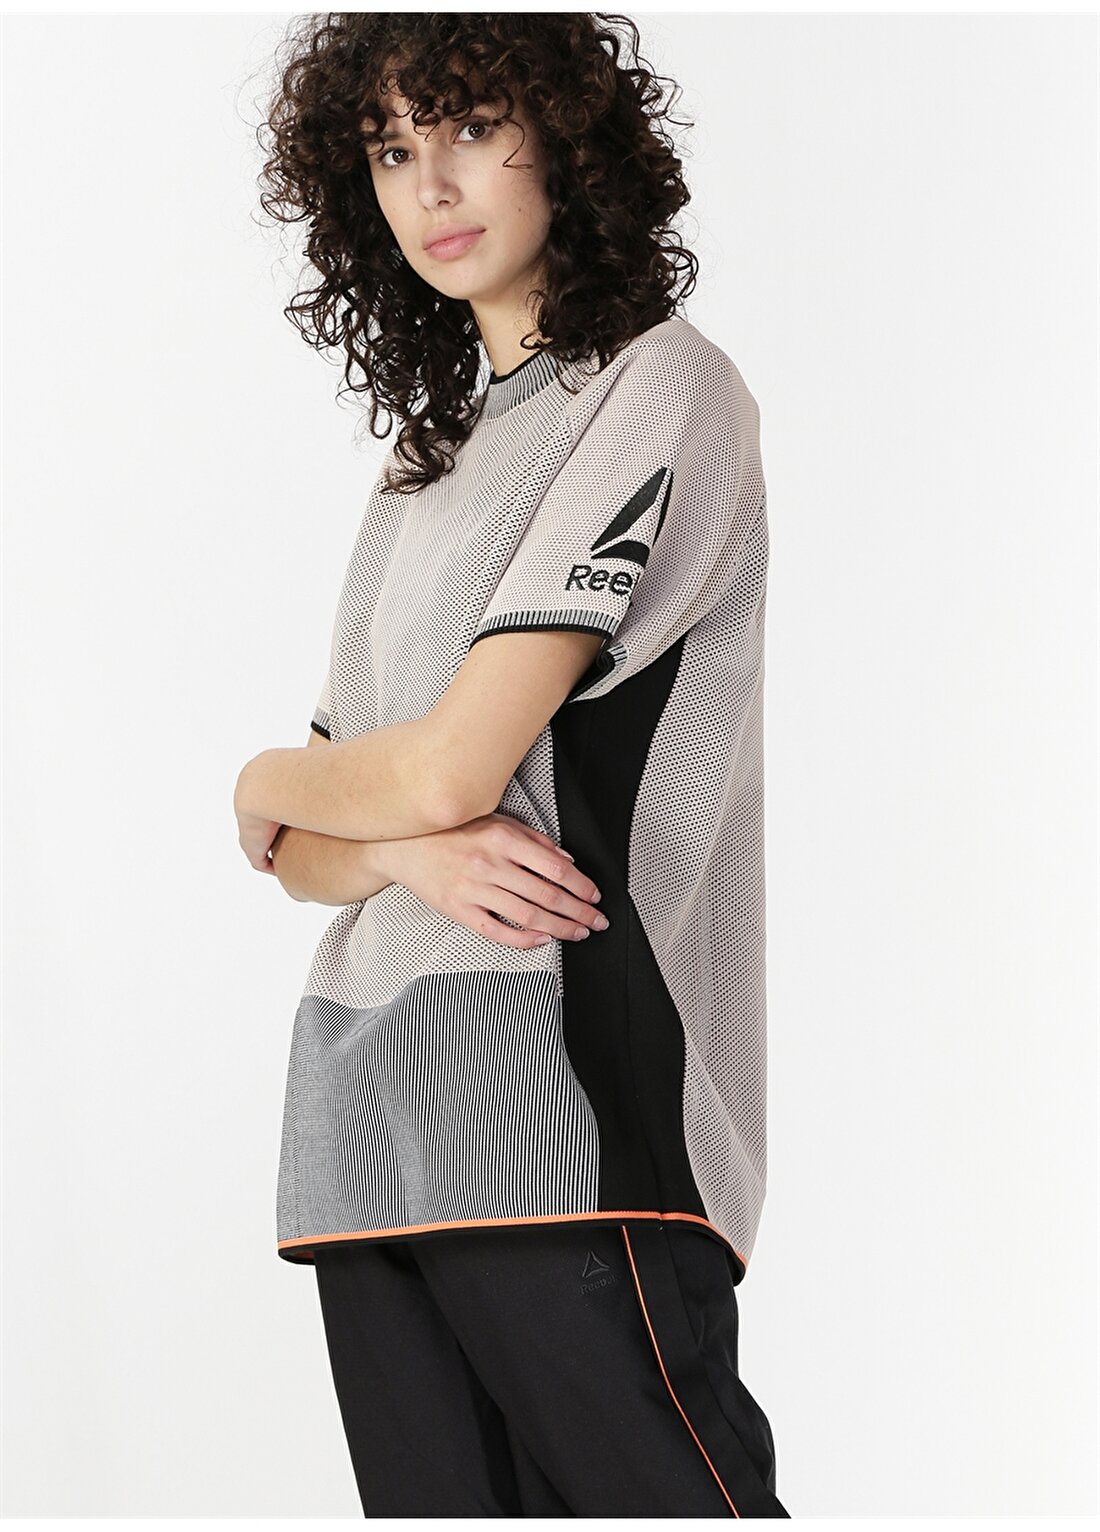 Reebok EB8106 Cardio Knit Fashion T-Shirt